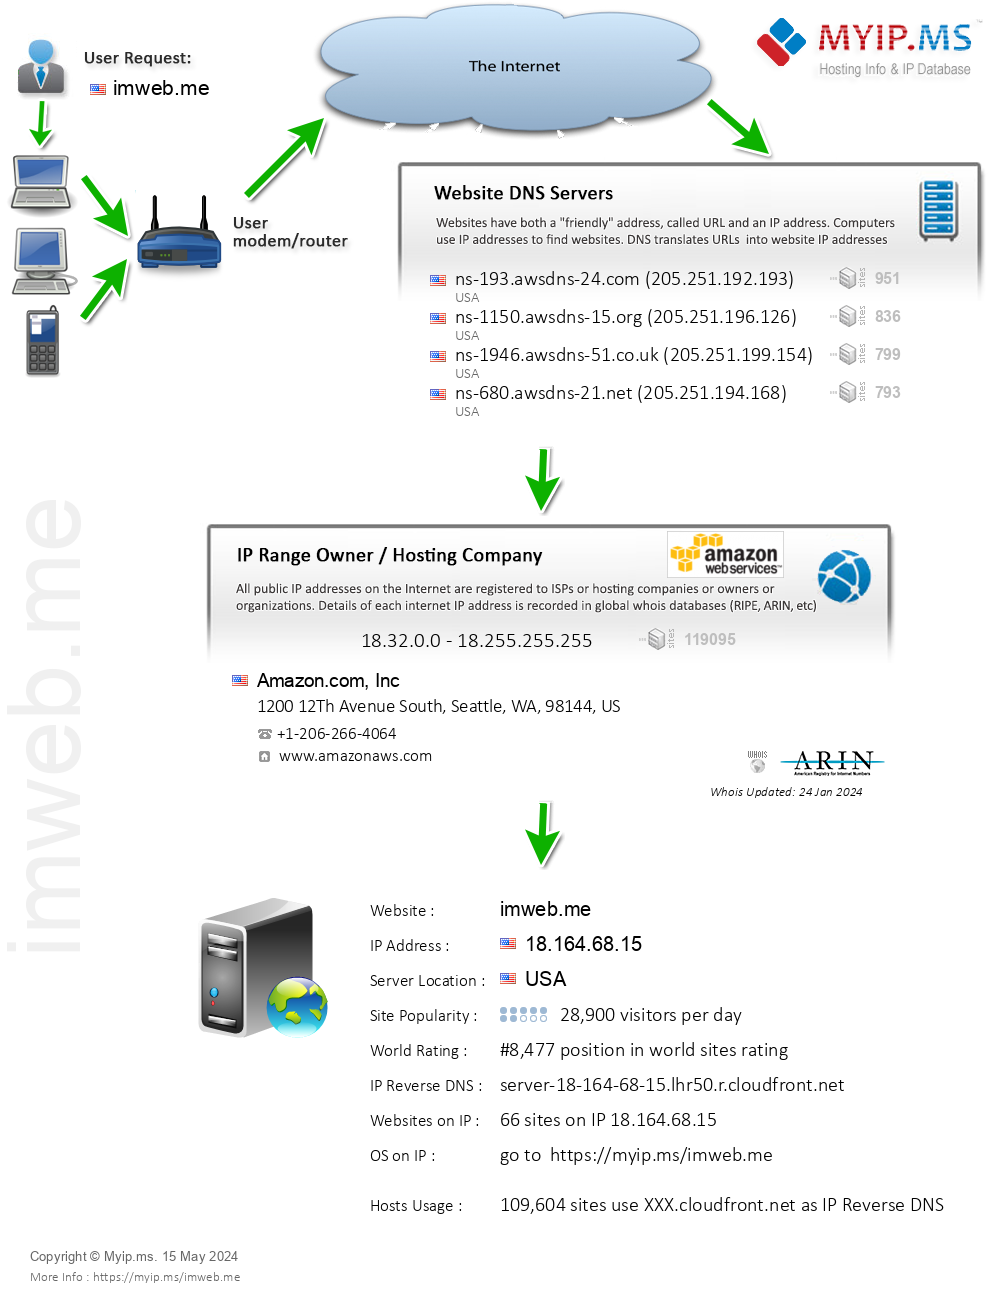 Imweb.me - Website Hosting Visual IP Diagram